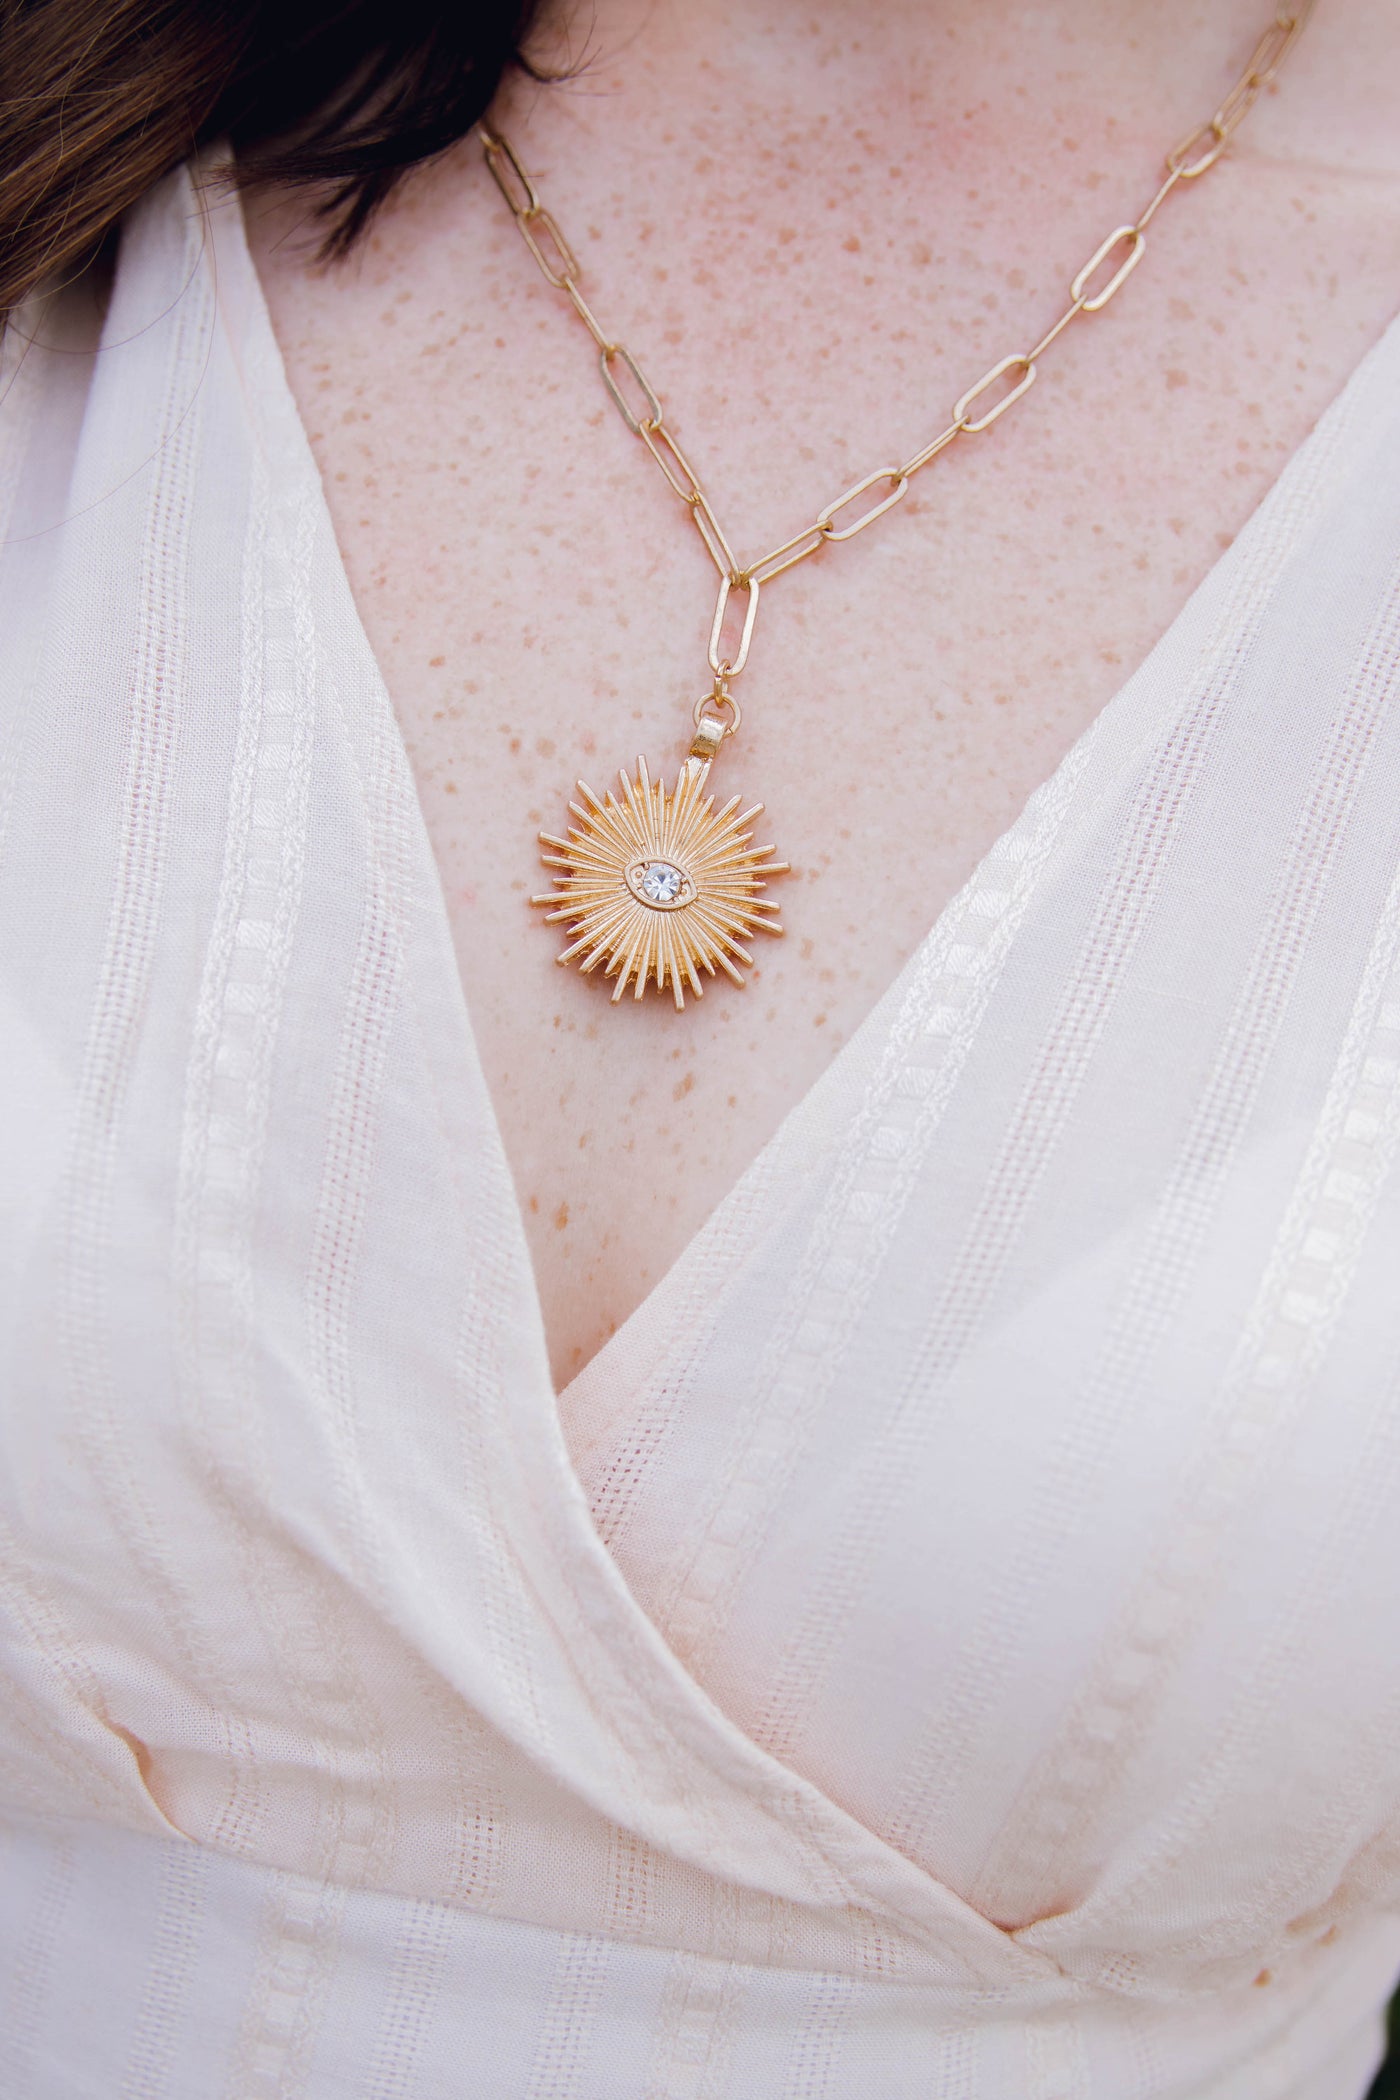 Canvas Chain Necklace- Sunburst Pendent Necklace- Evil Eye Gold Necklace